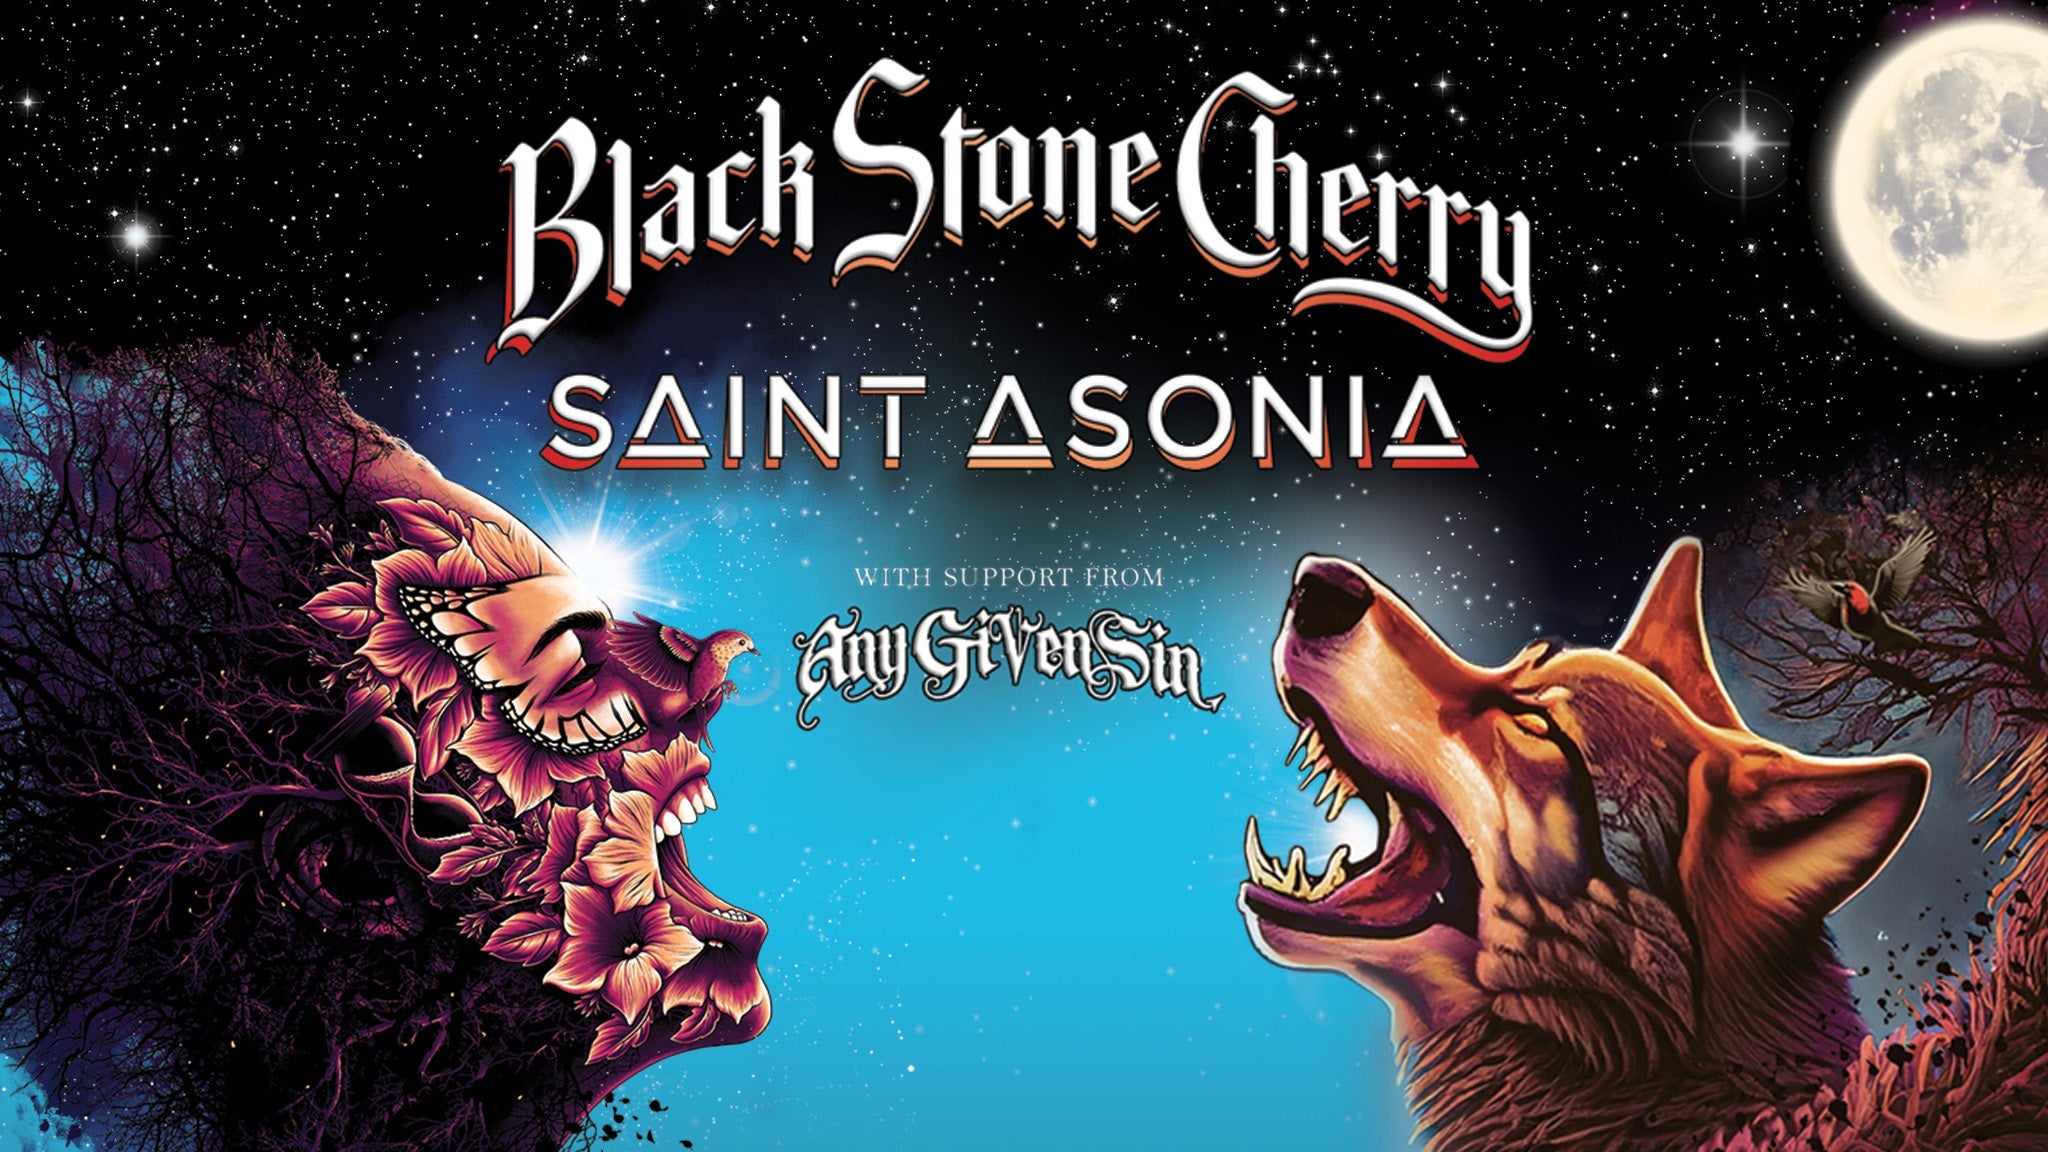 Black Stone Cherry & Saint Asonia presale code